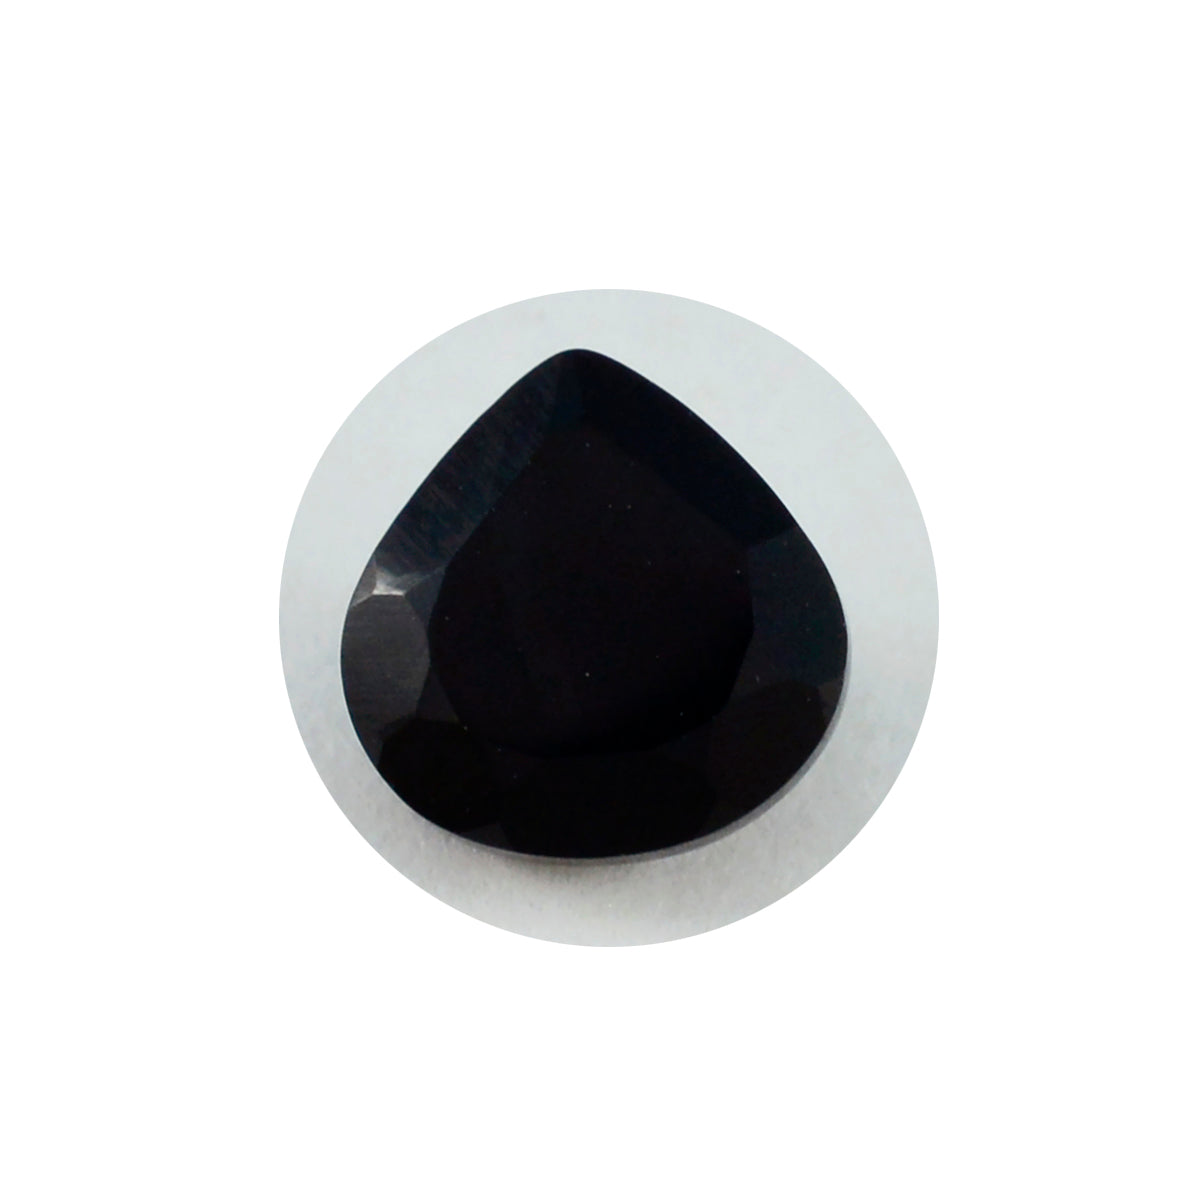 Riyogems 1PC Genuine Black Onyx Faceted 14x14 mm Heart Shape Good Quality Gem